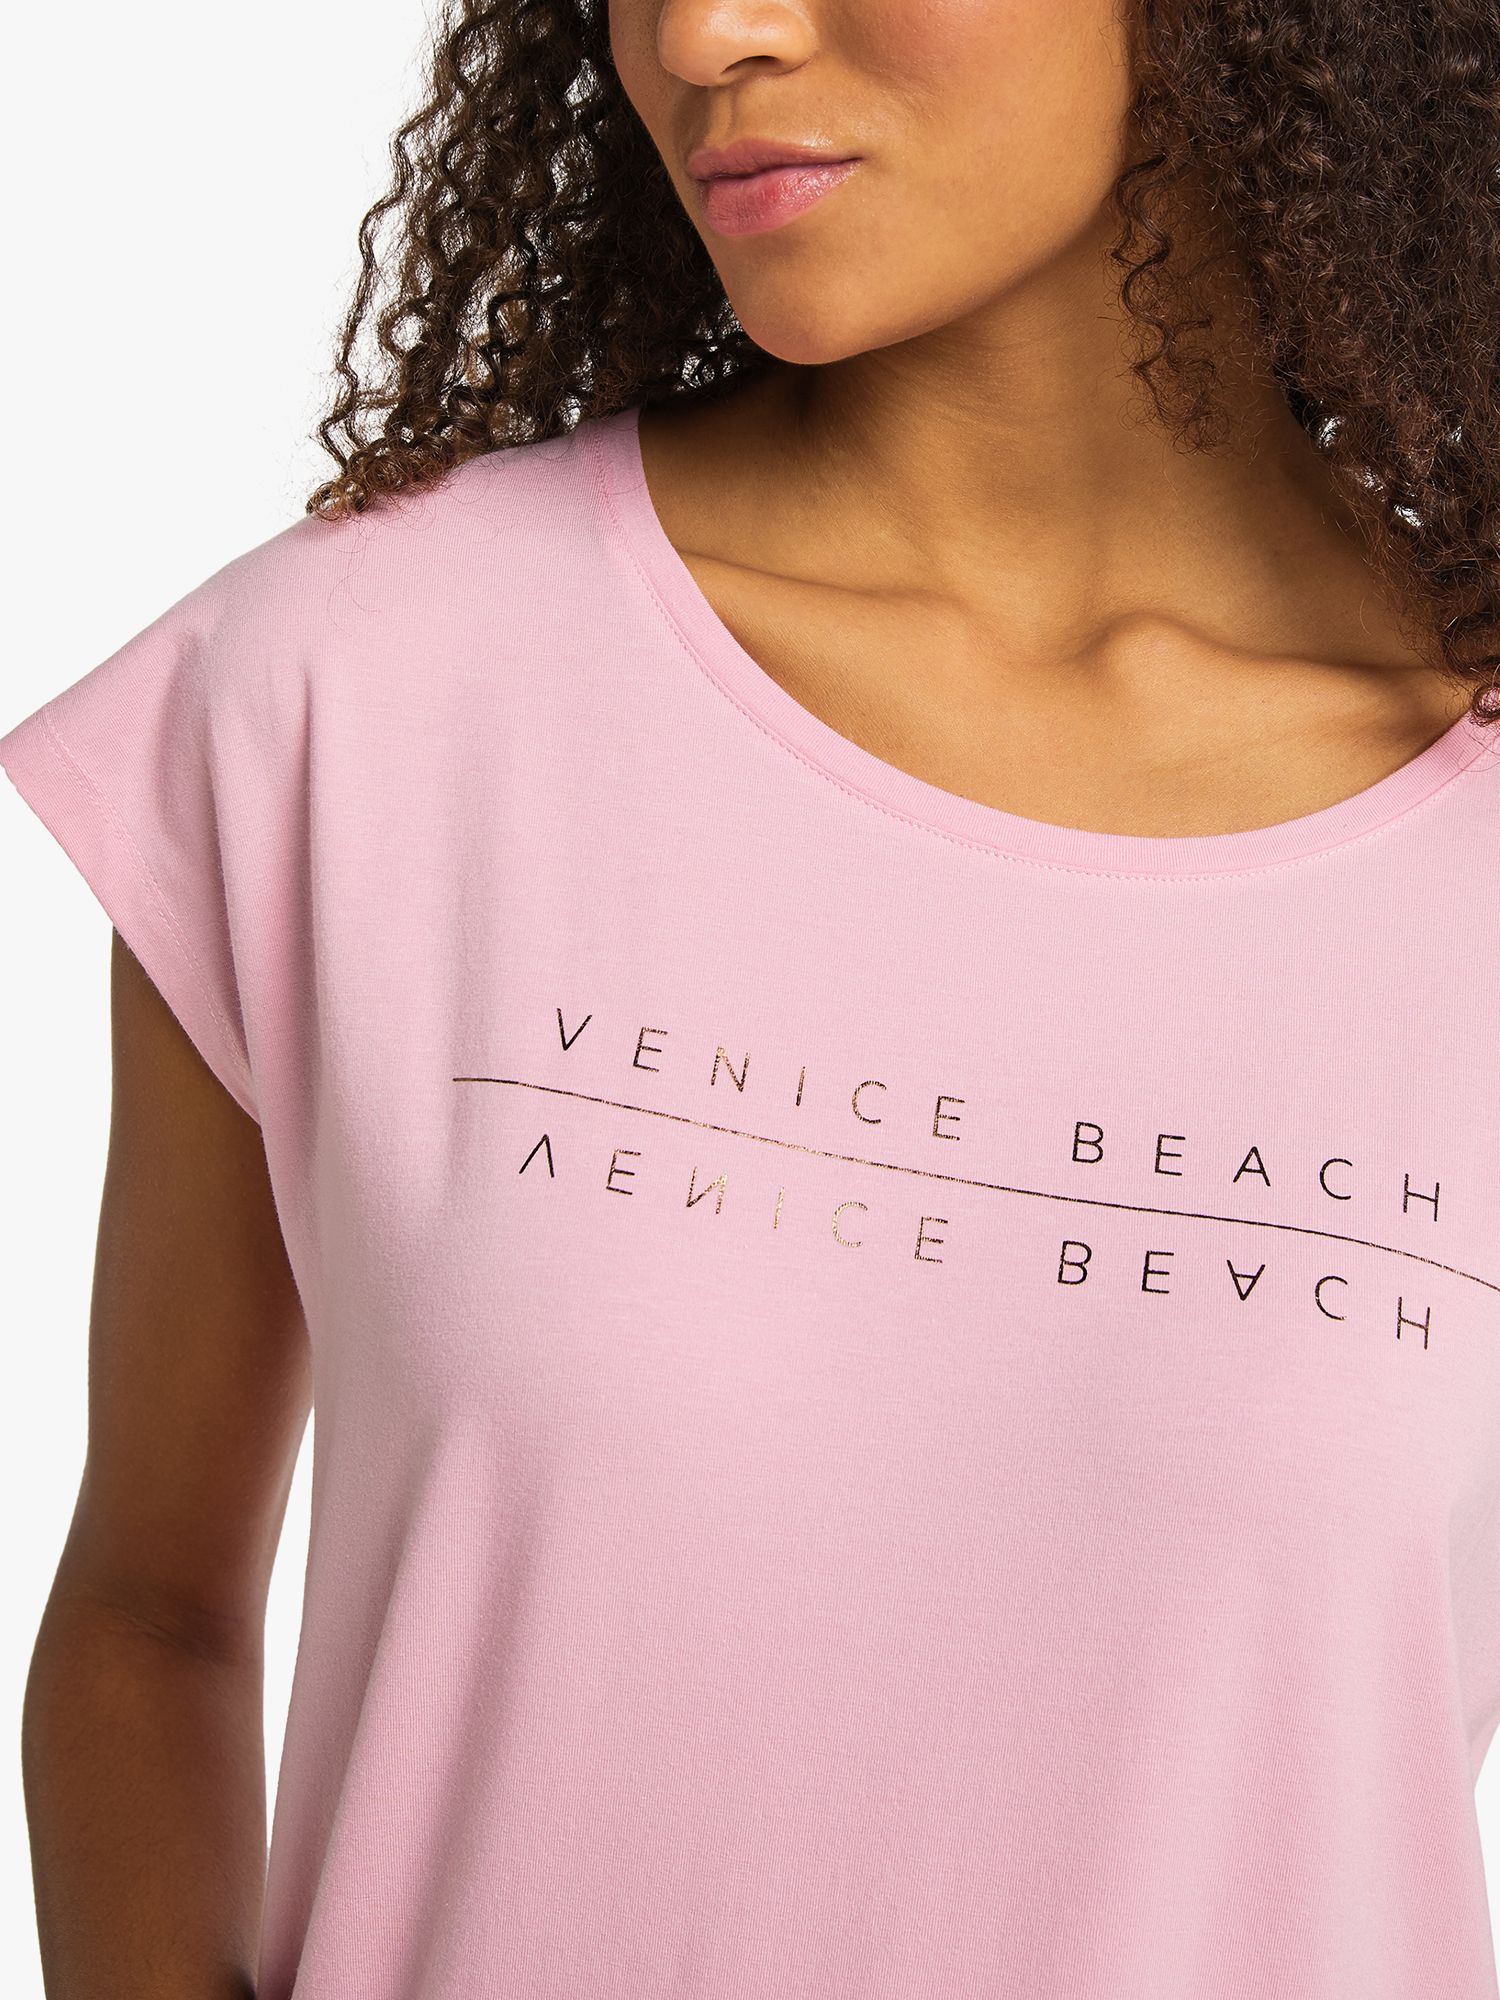 Venice Beach Wonder Short Sleeve Gym Top, Cameo Rose, S